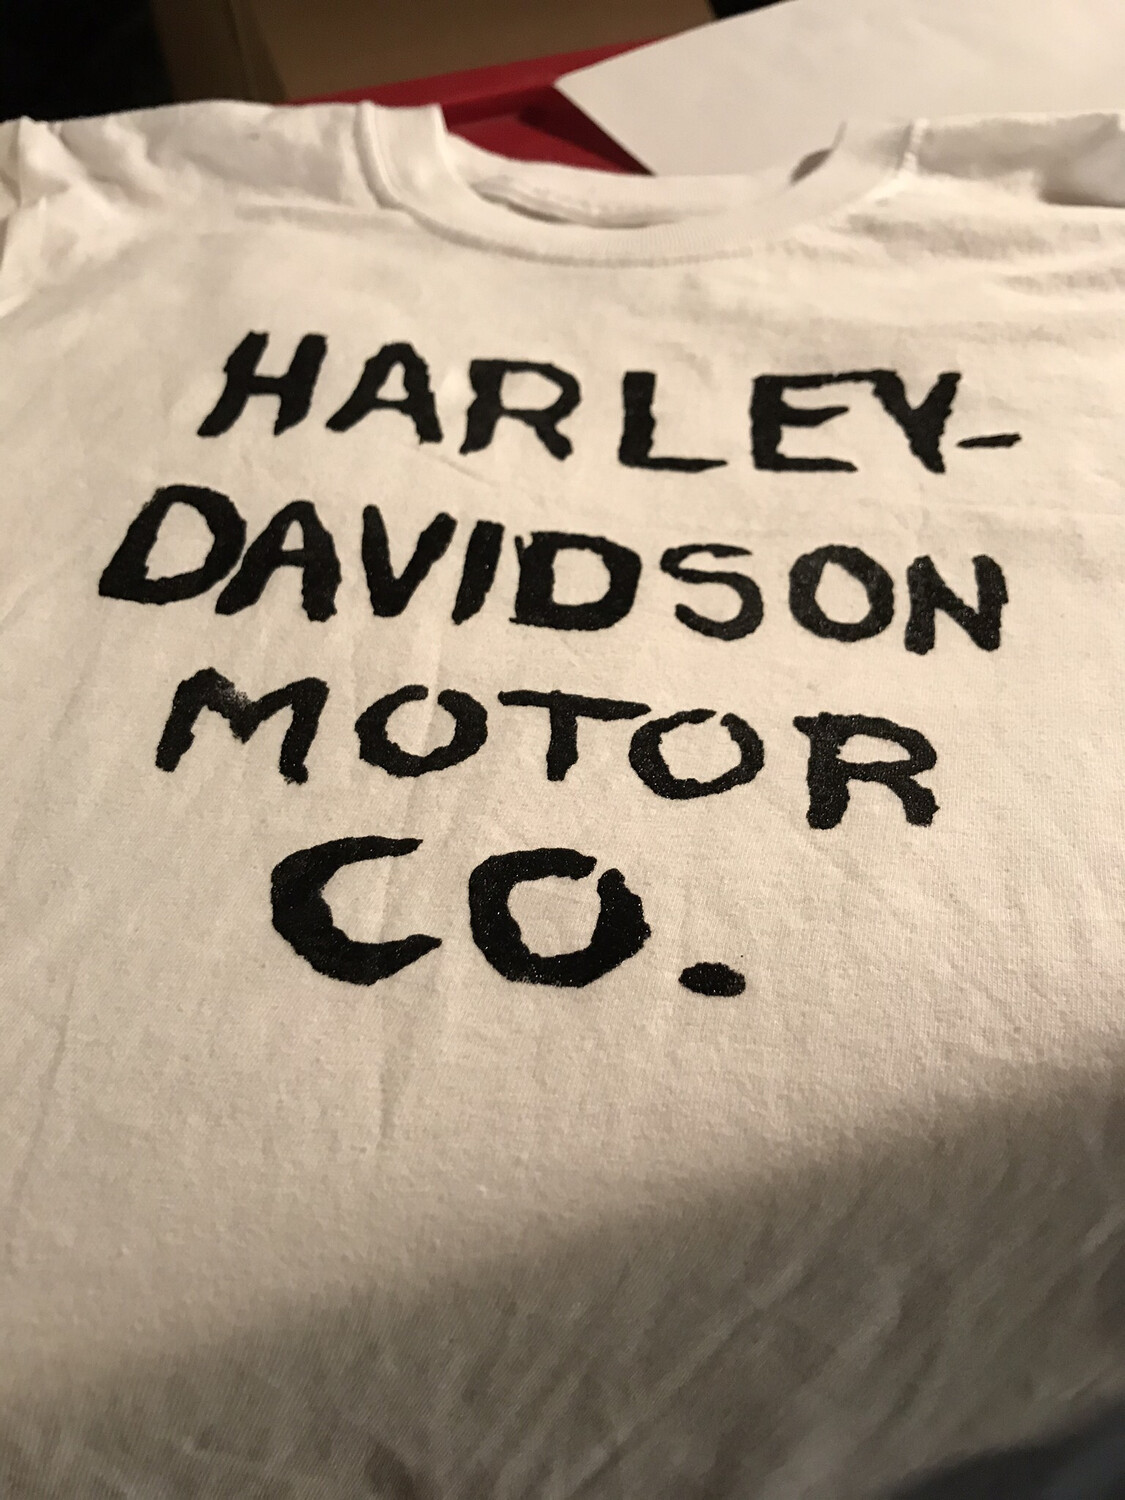 Harley Davidson Motor Co